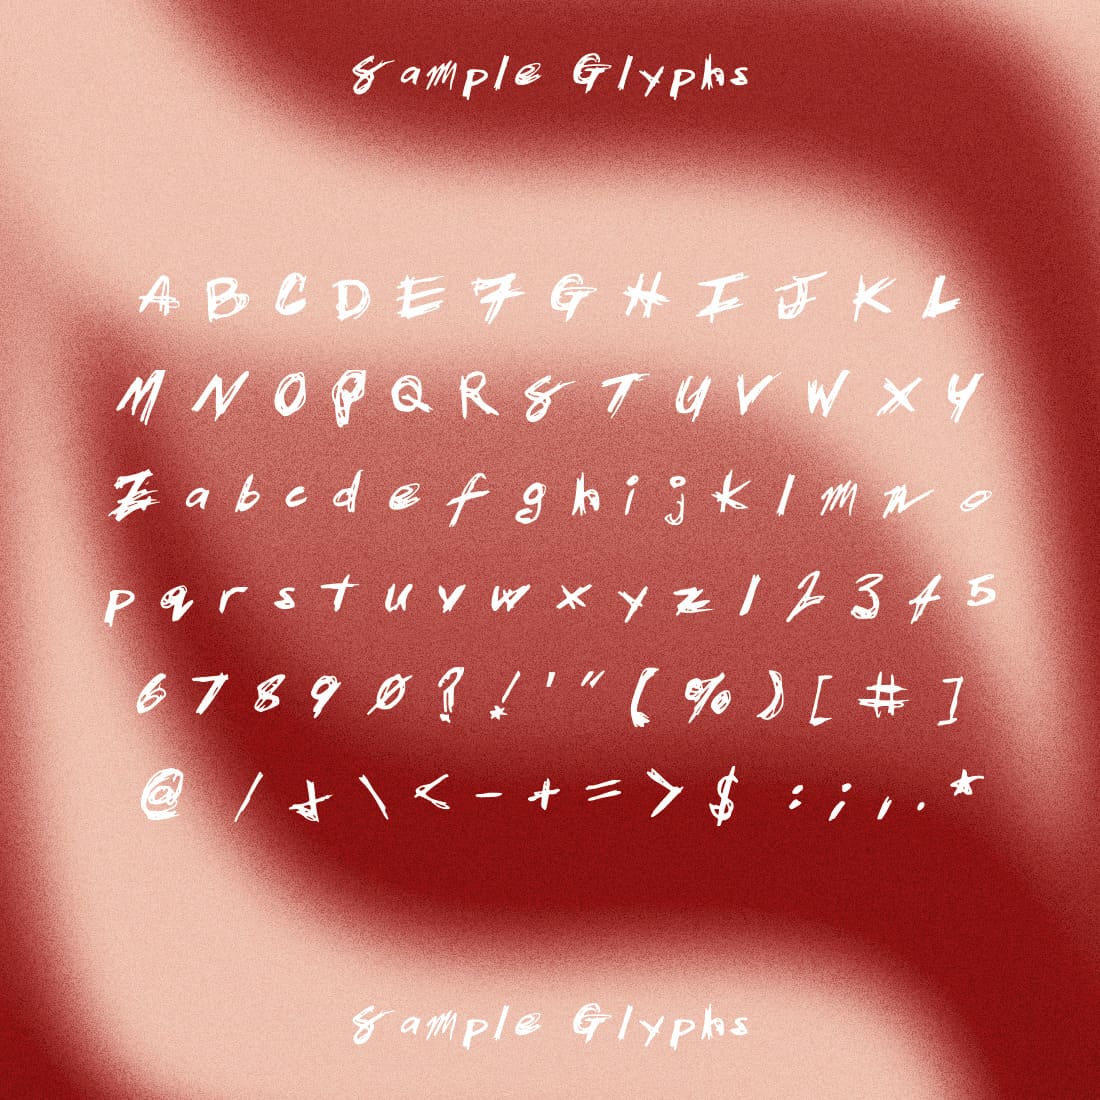 Free Patrick Scratch Font sample glyphs.